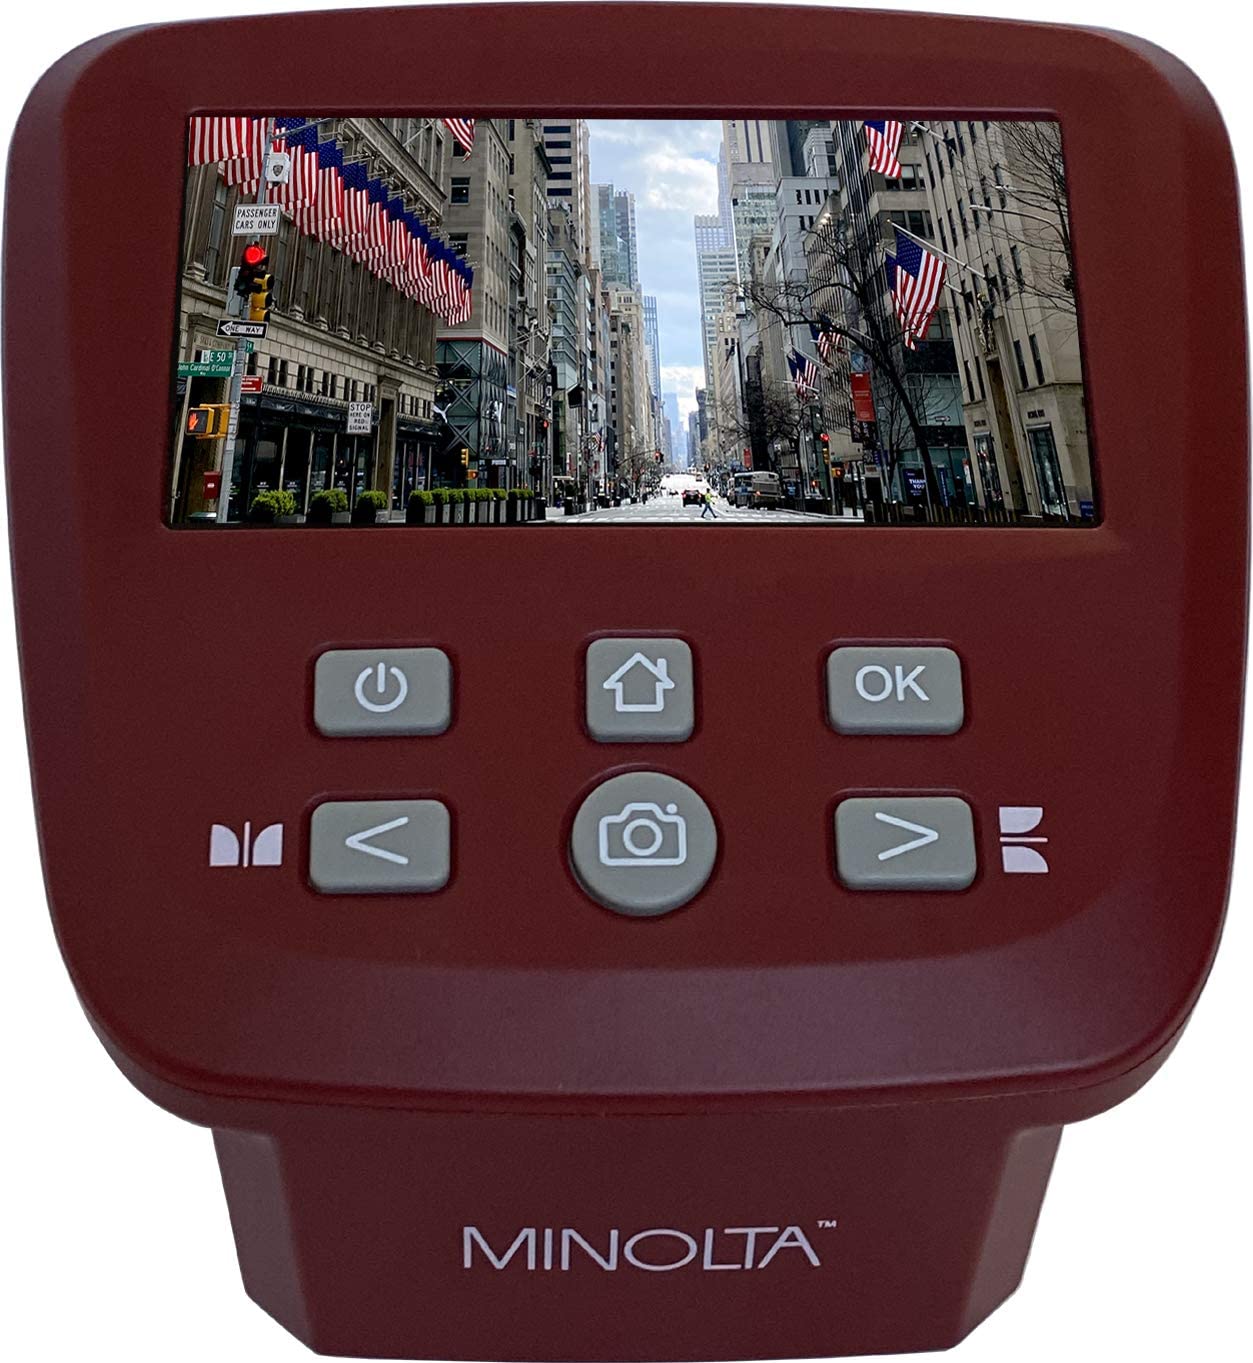 MINOLTA Film  Slide Scanner, Large 5" Screen, Convert Color  BW 35mm, 126,  110 Negative  Slides, Super Films to High Res 22MP JPEG Digital Photos,  16GB SD Card, Worldwide